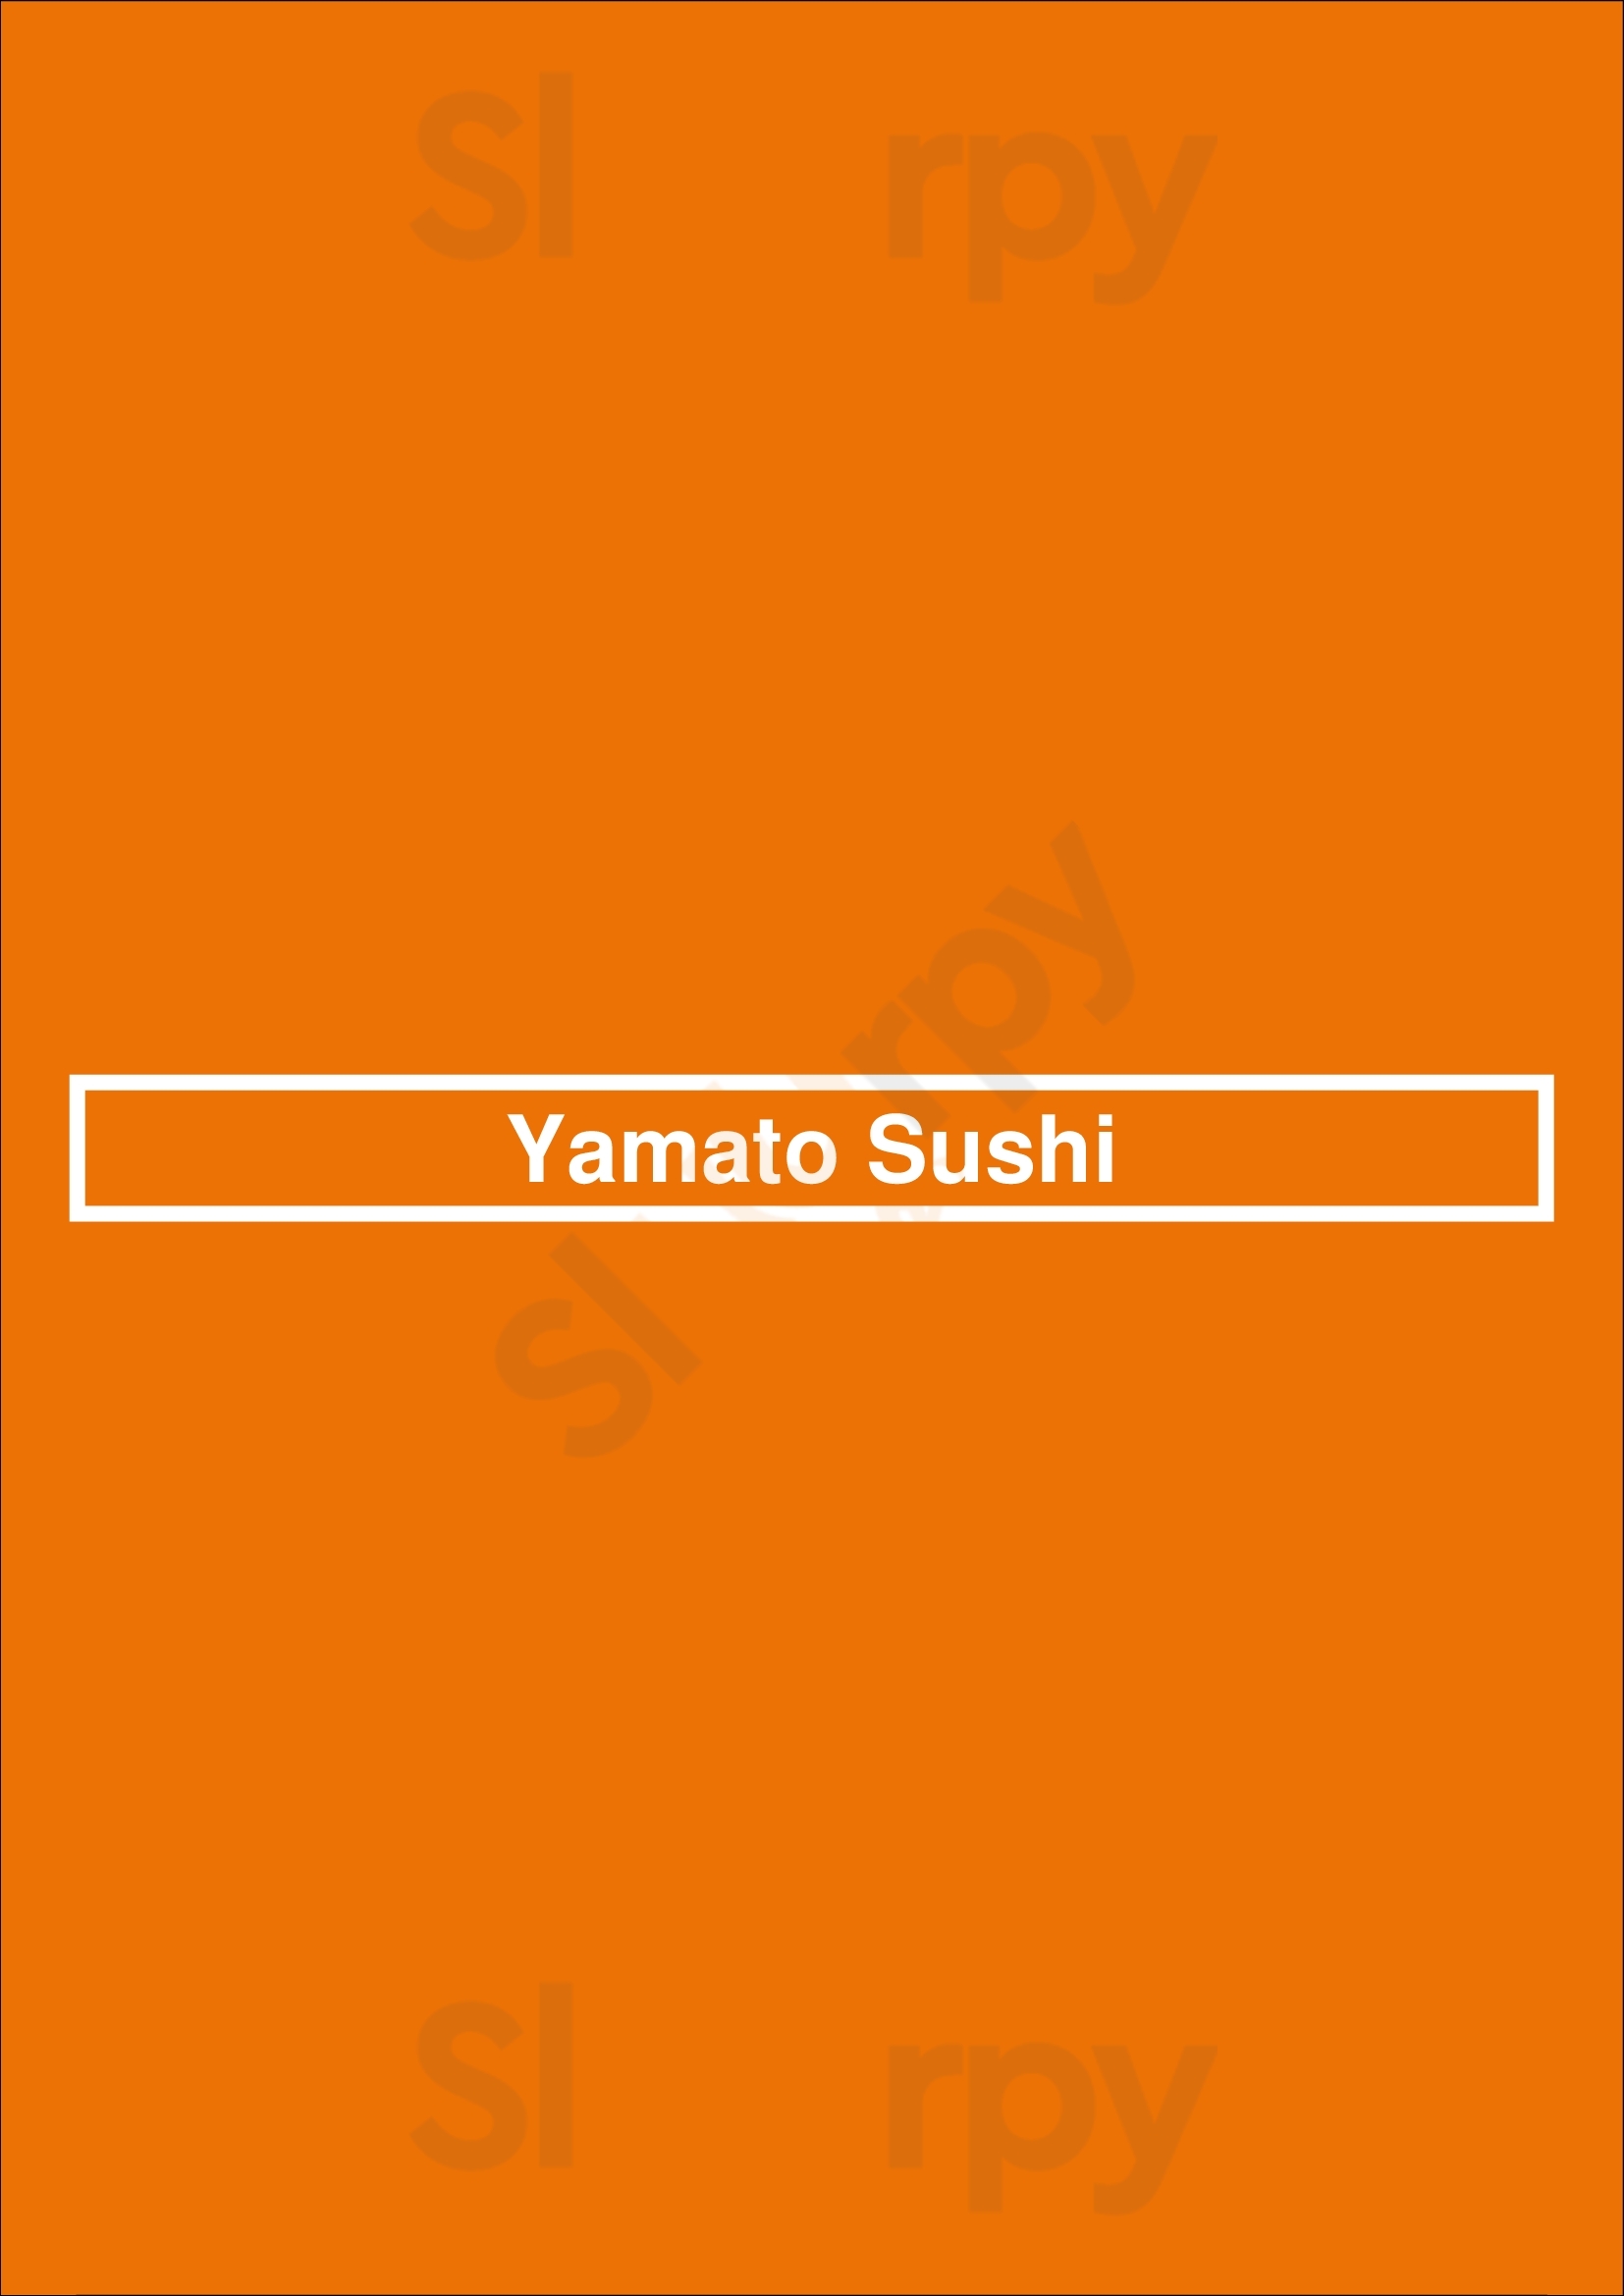 Yamato Sushi Omaha Menu - 1